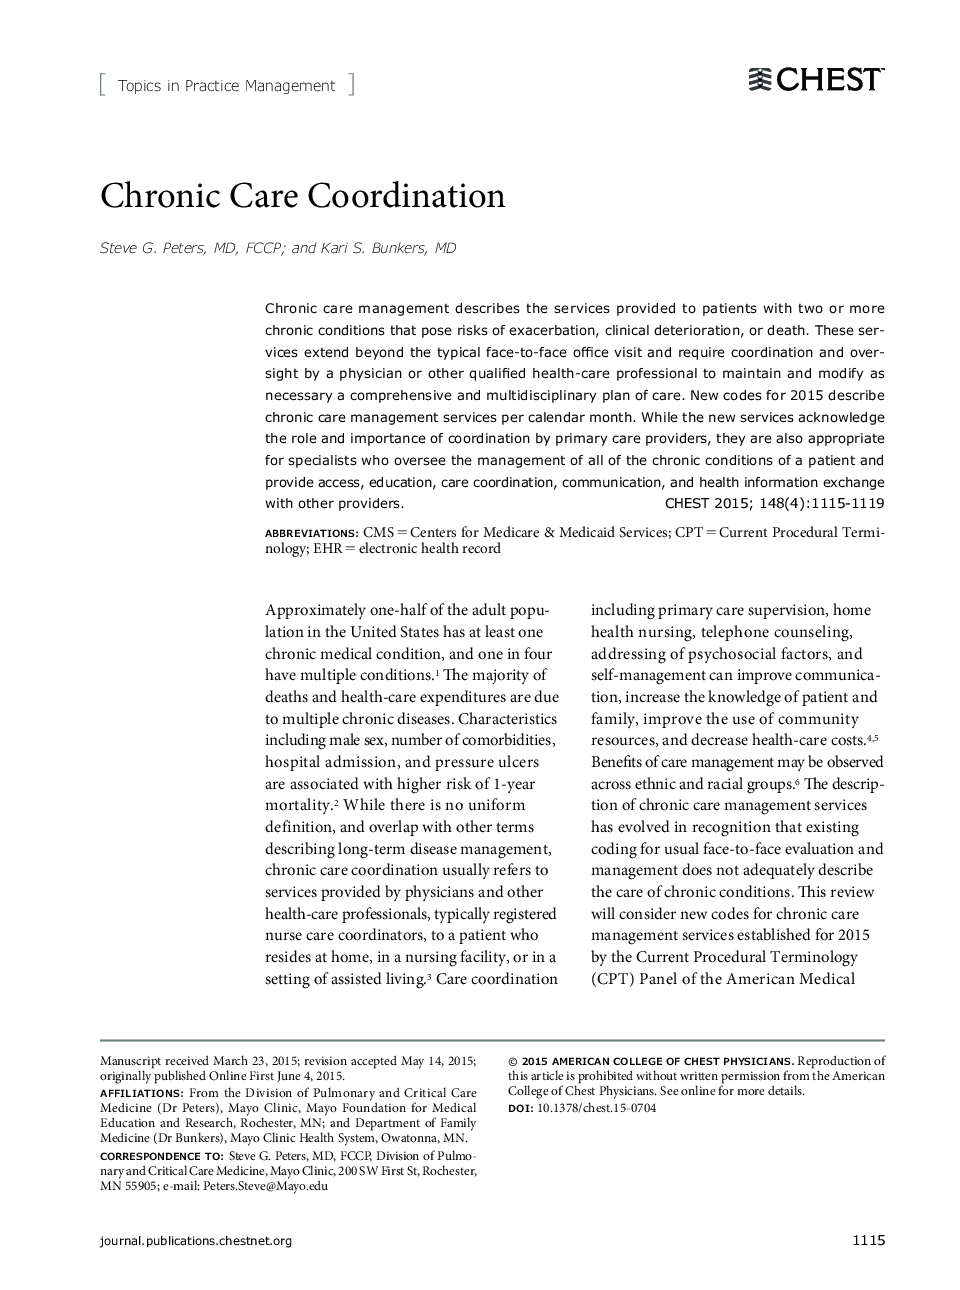 Chronic Care Coordination